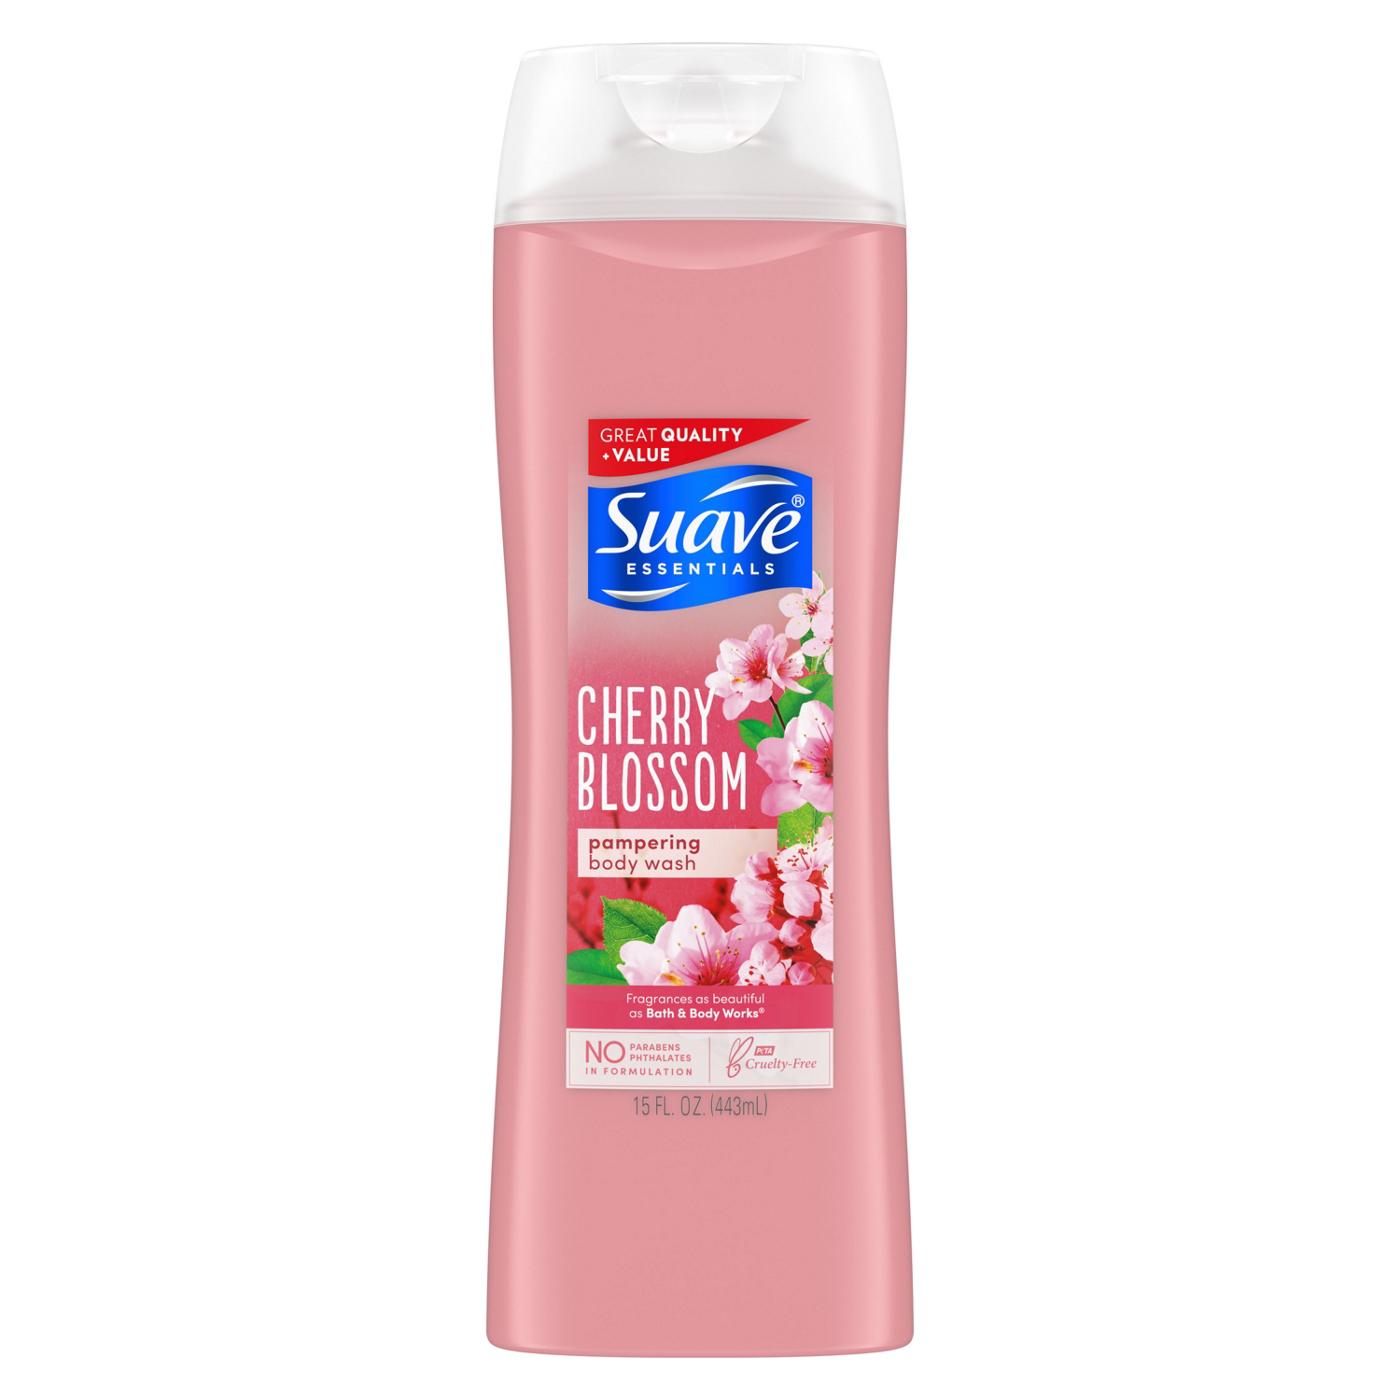 Suave Essentials Body Wash Wild Cherry Blossom; image 1 of 4